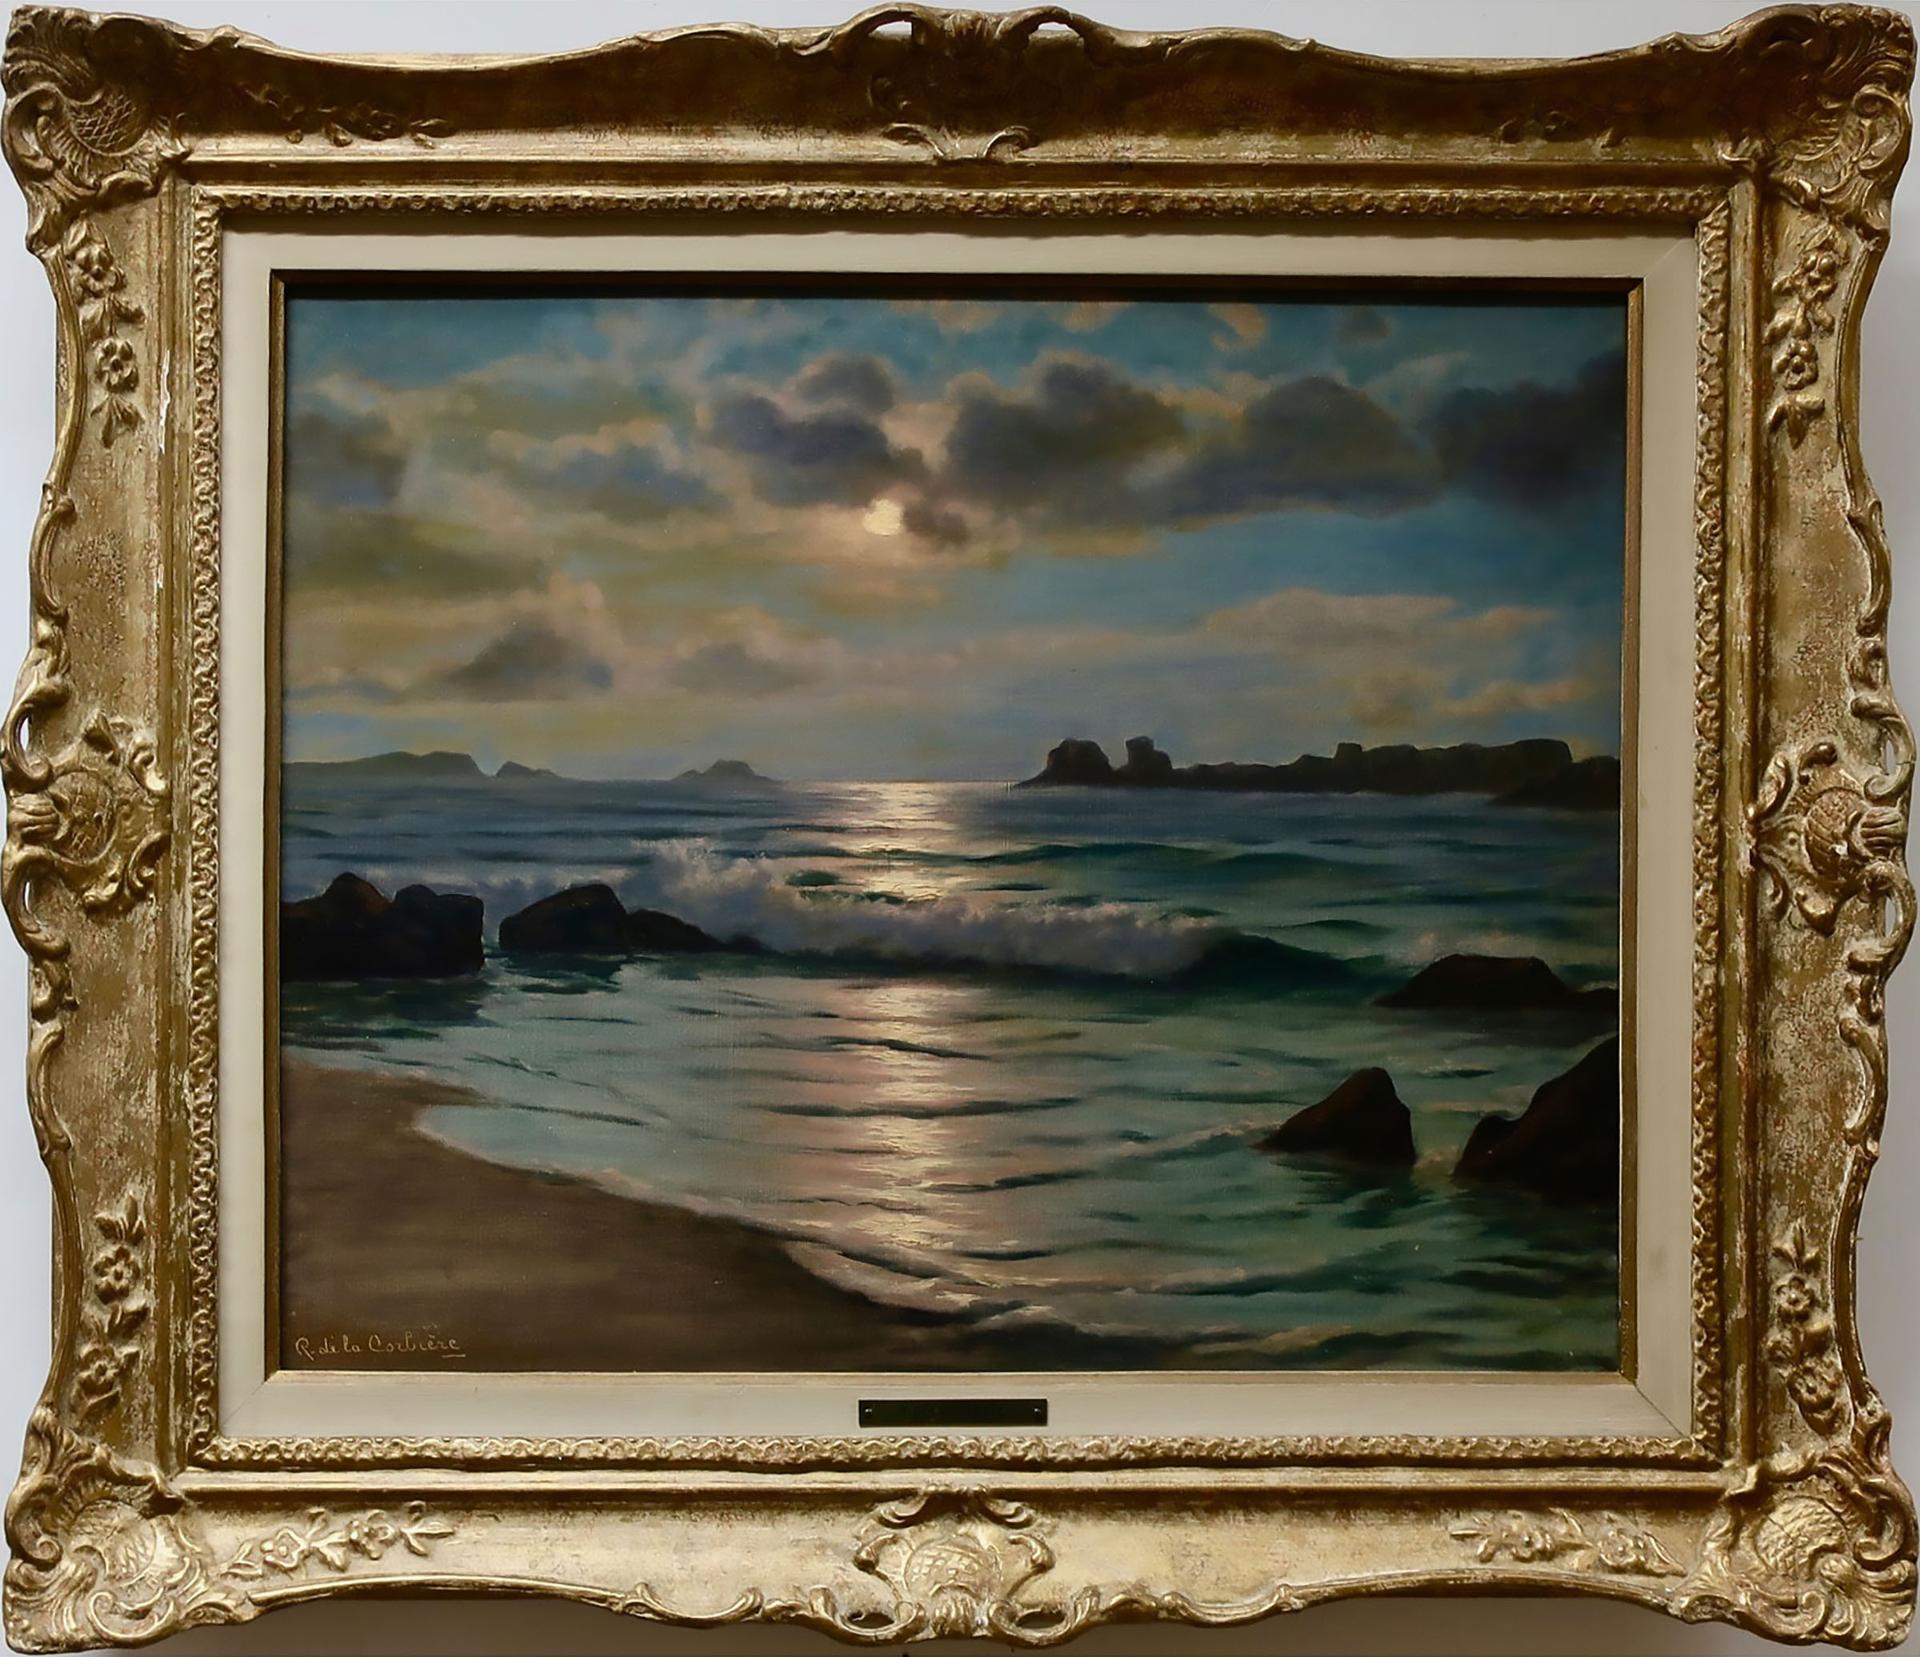 Roger de la Corbiere (1893-1974) - Moonlit Coastal View